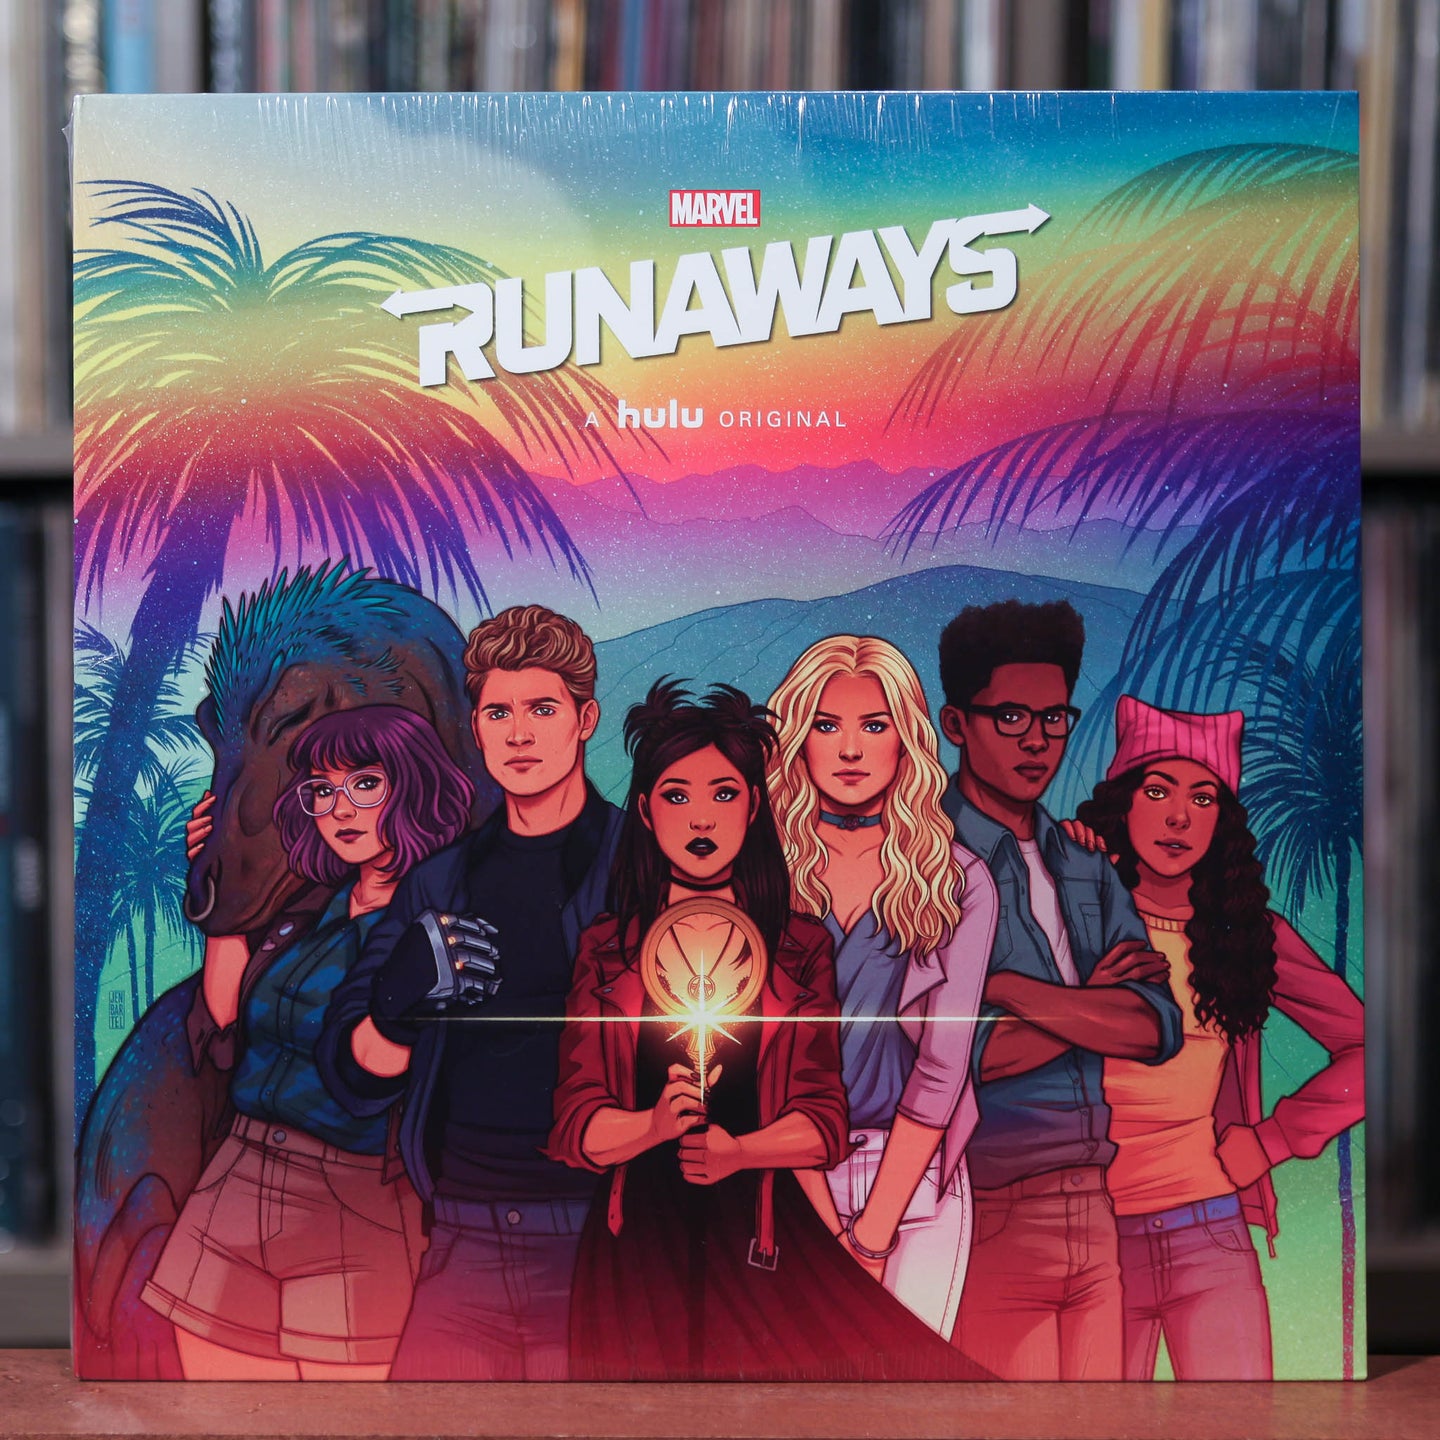 Marvel's Runaways (Hulu Original) - 2018 Hollywood, SEALED